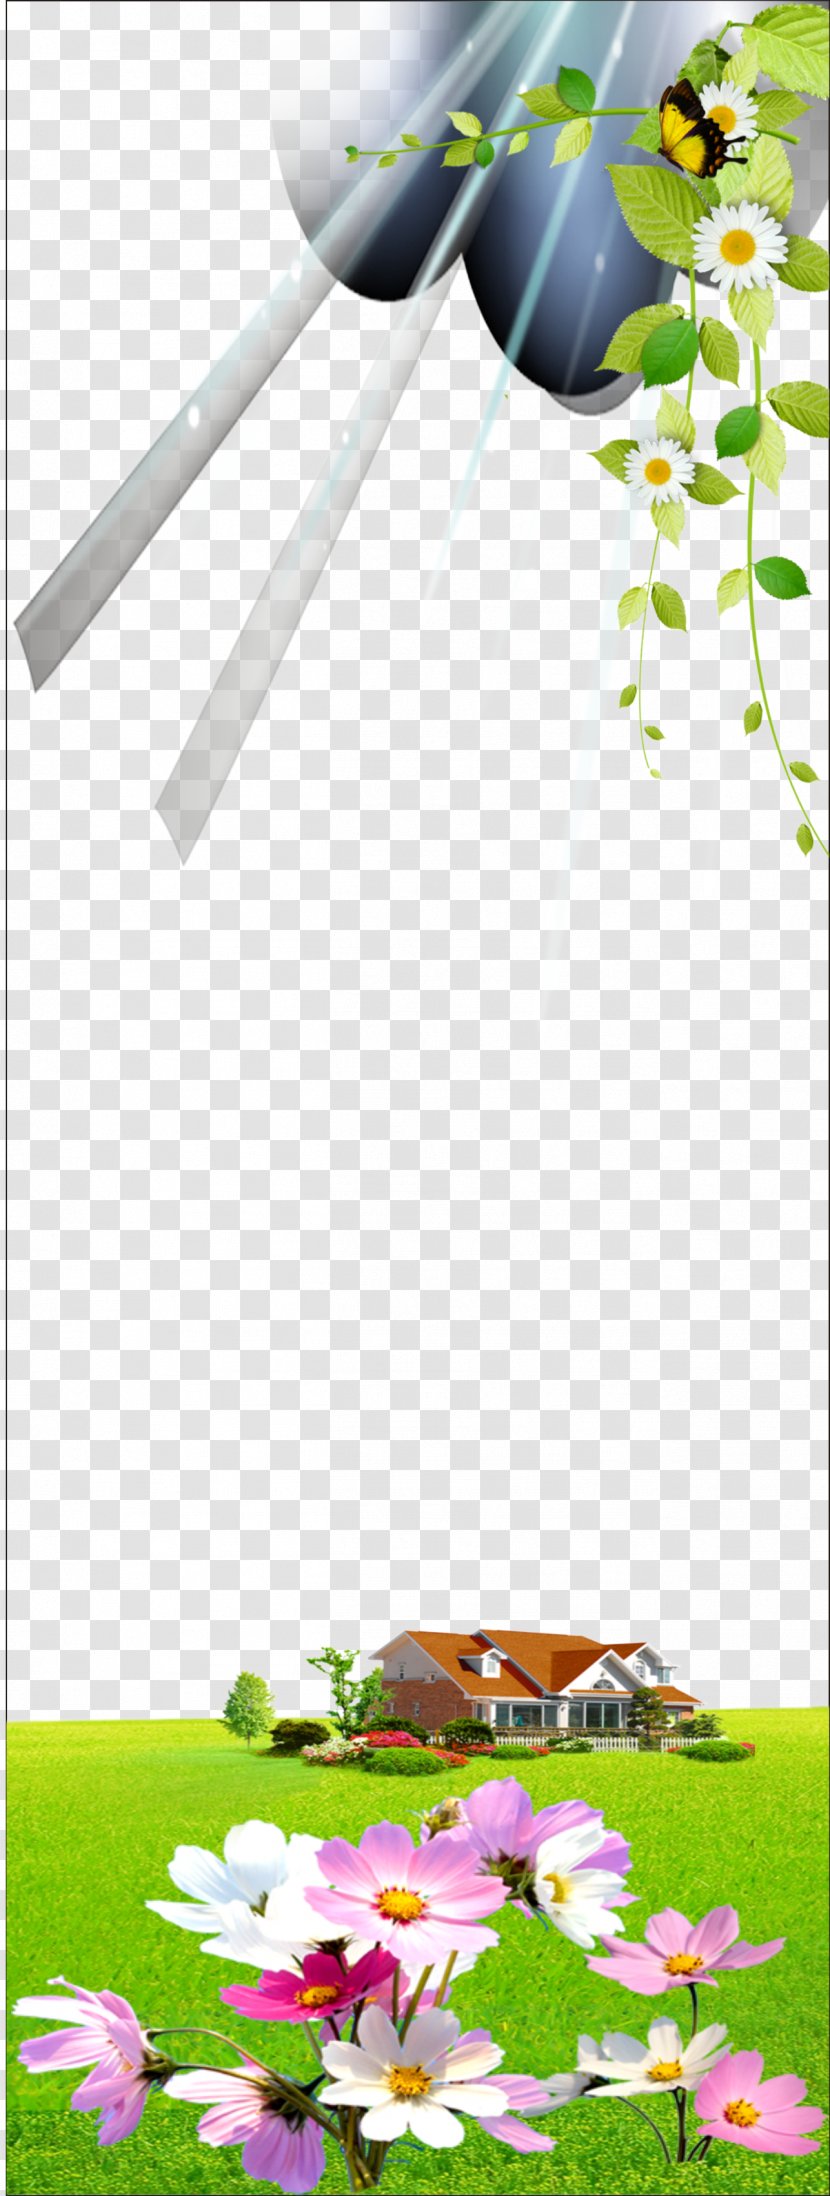 Shading Panels - Meadow - Floral Design Transparent PNG